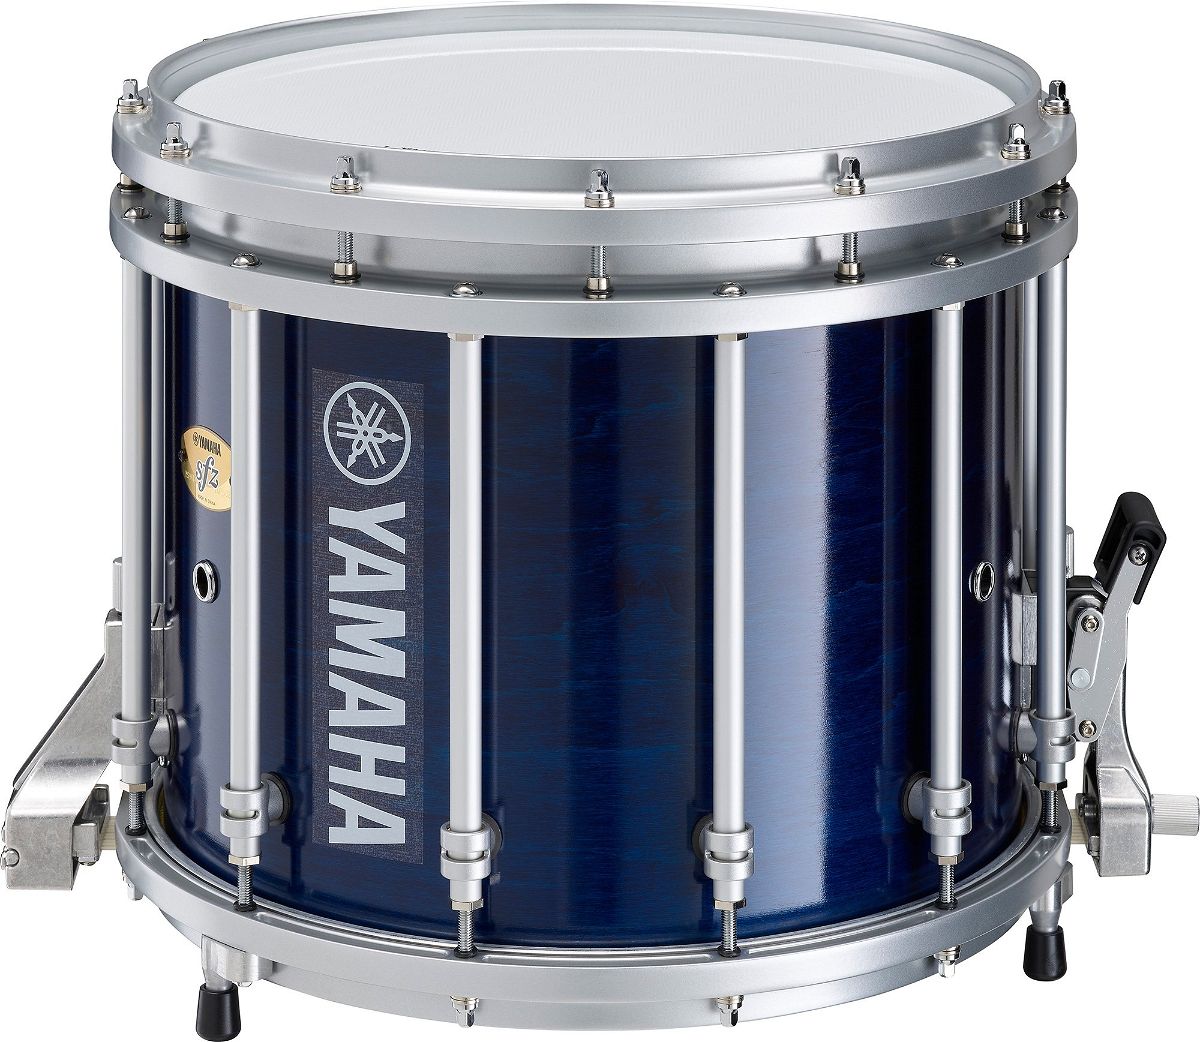 Yamaha MS 9414 SFZ Marching Snare Drum 14x12 Yamaha MS 9414 SFZ Marching Snare Drum 14x12 2